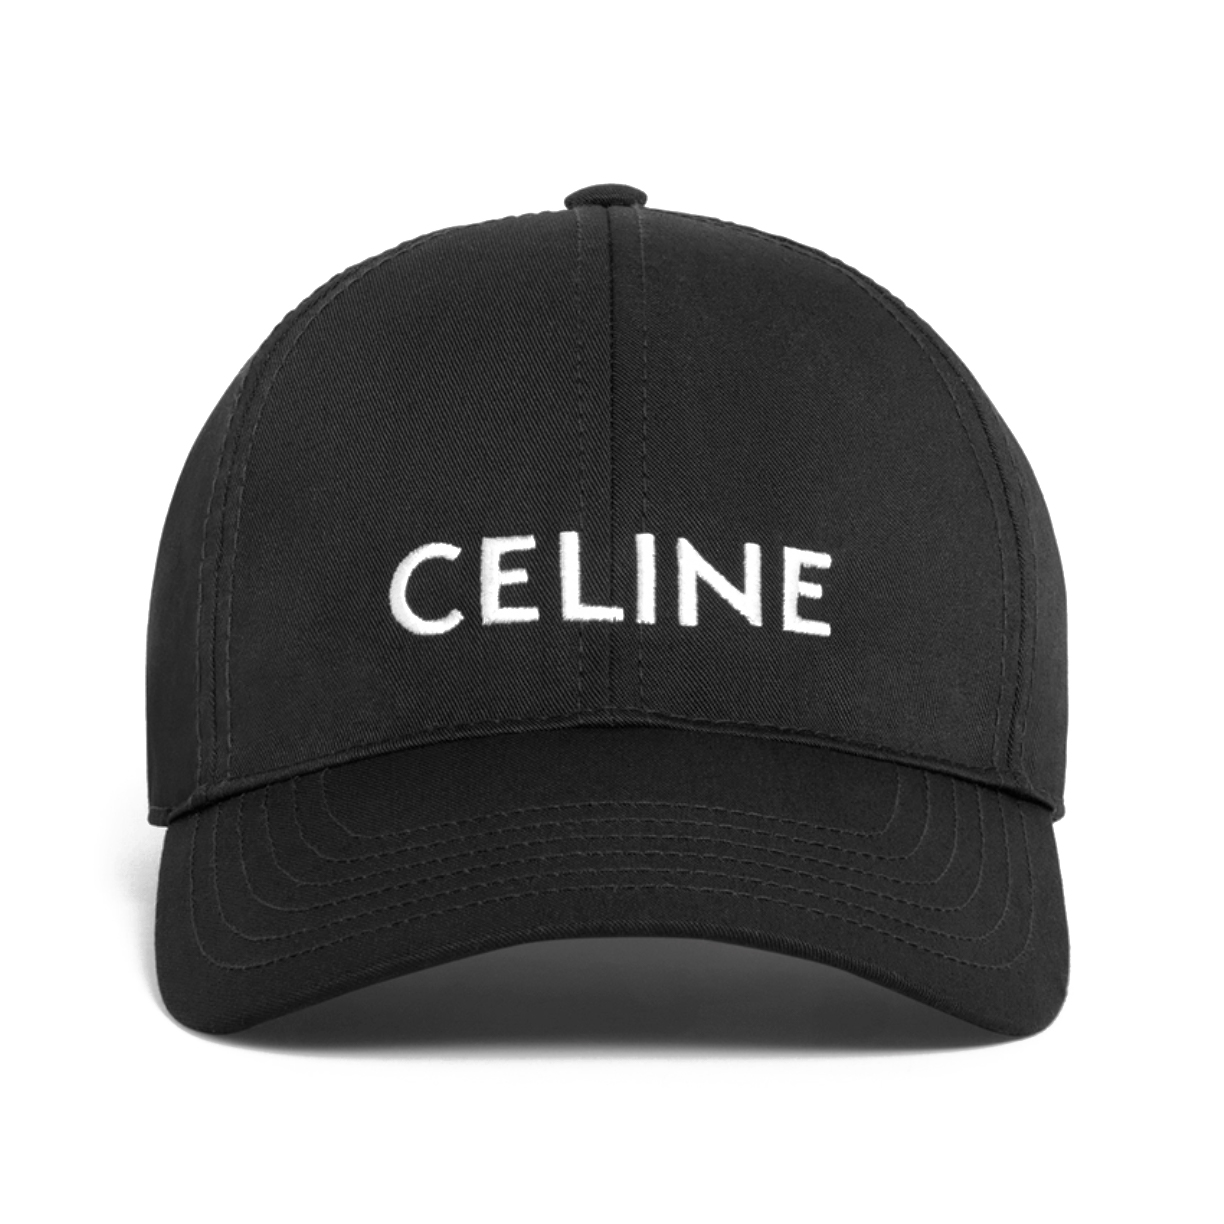 Celine Women's Cotton Baseball Cap Black - FW21 - US